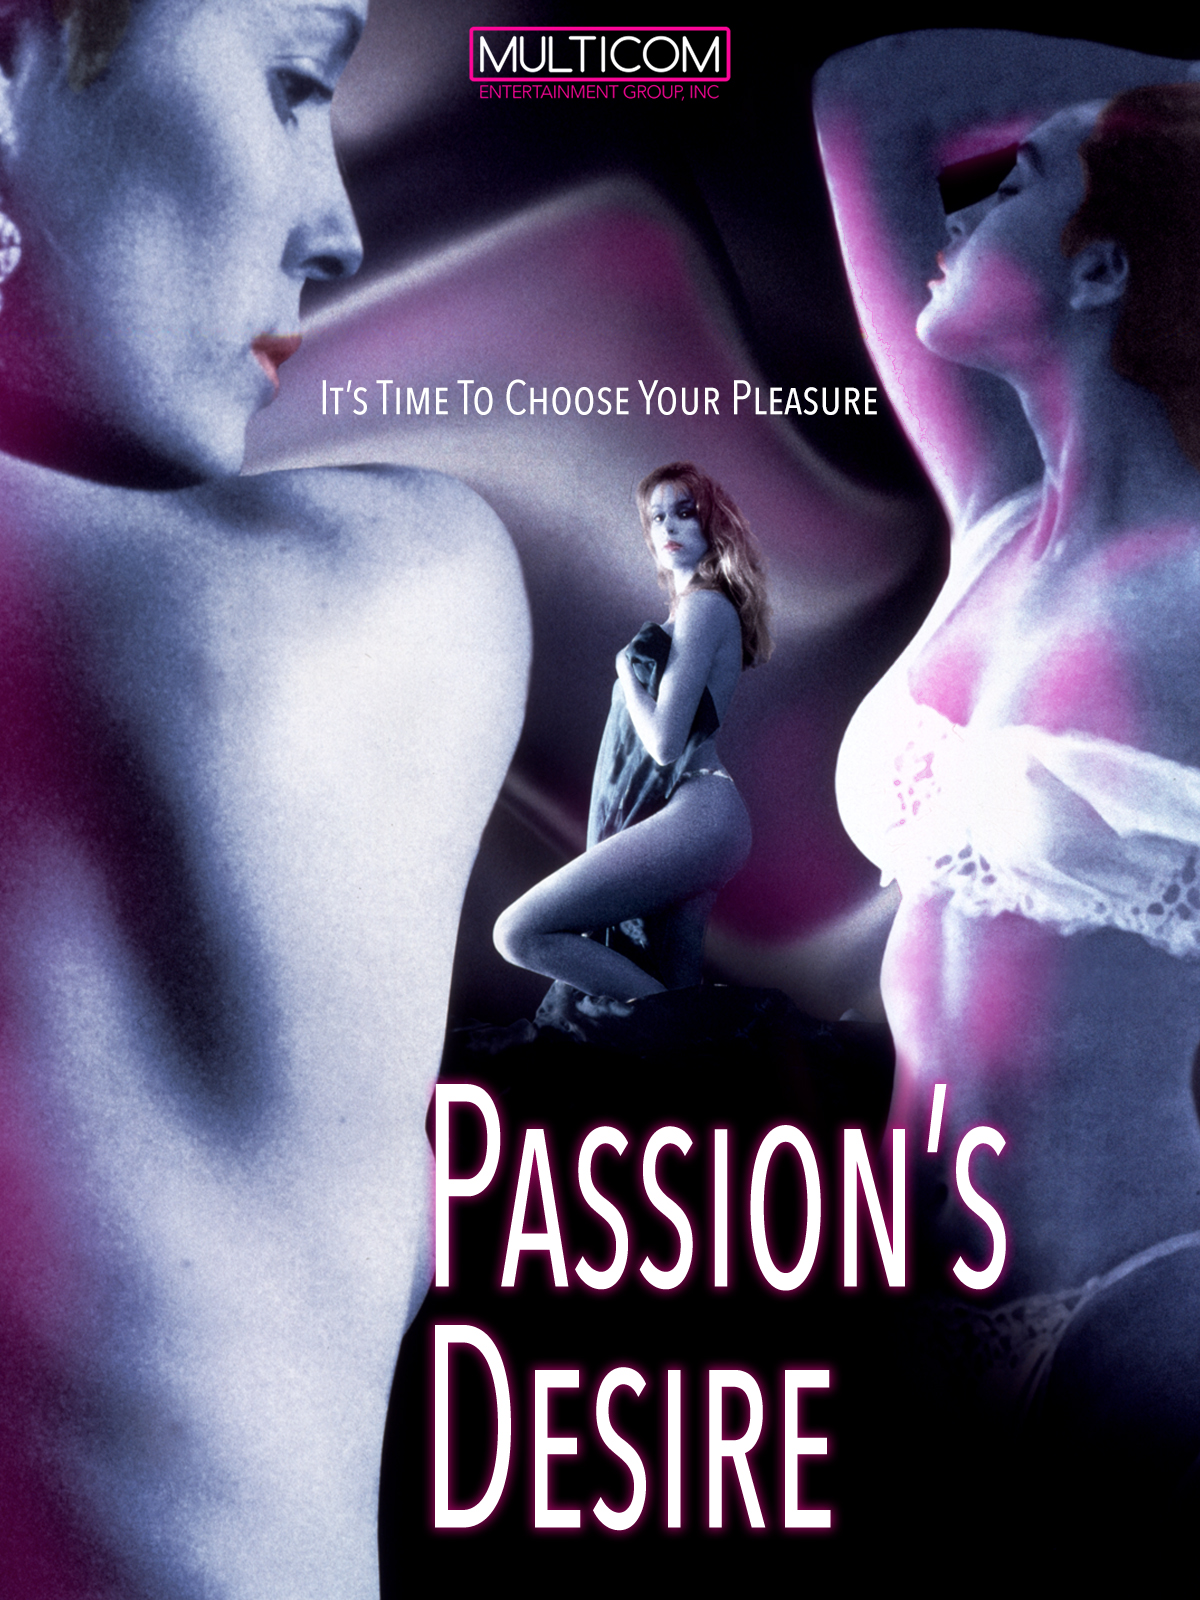 Passion's Desire (2000) Screenshot 3